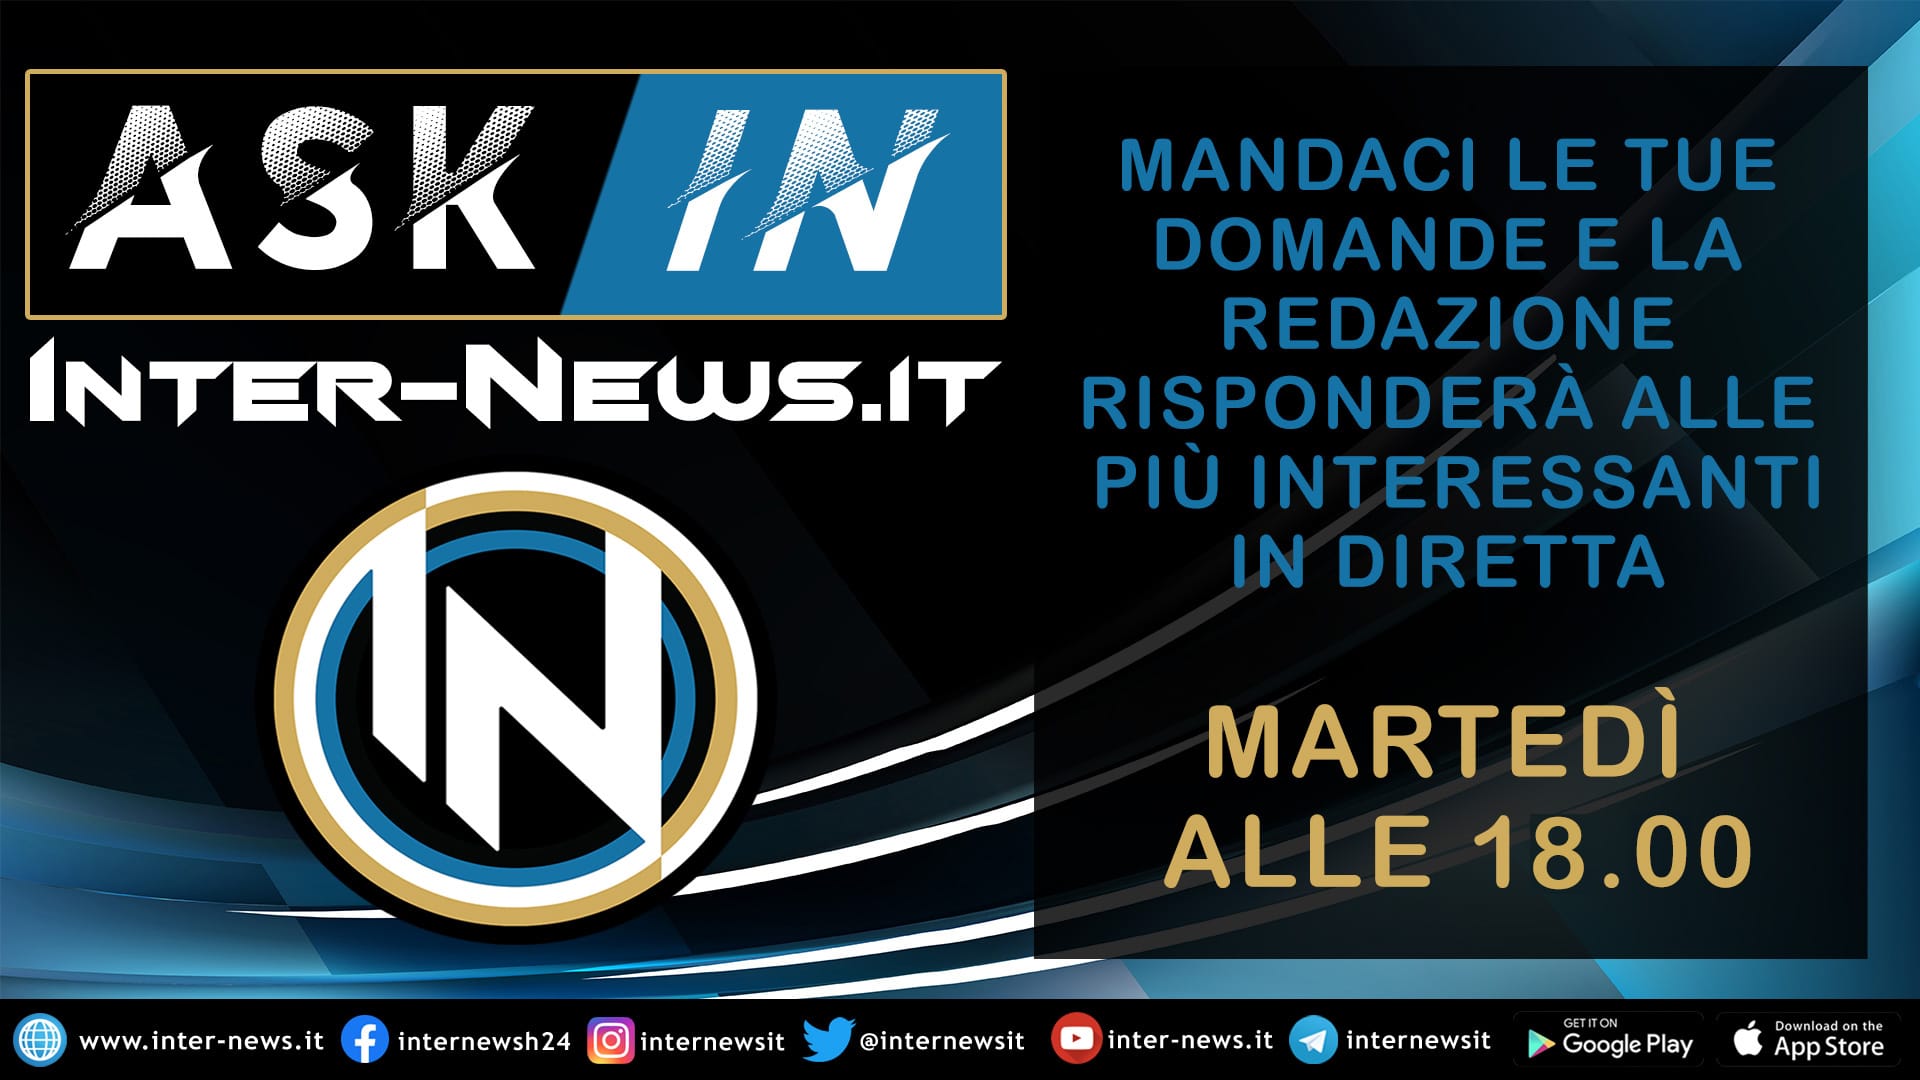 Ask Inter News 3